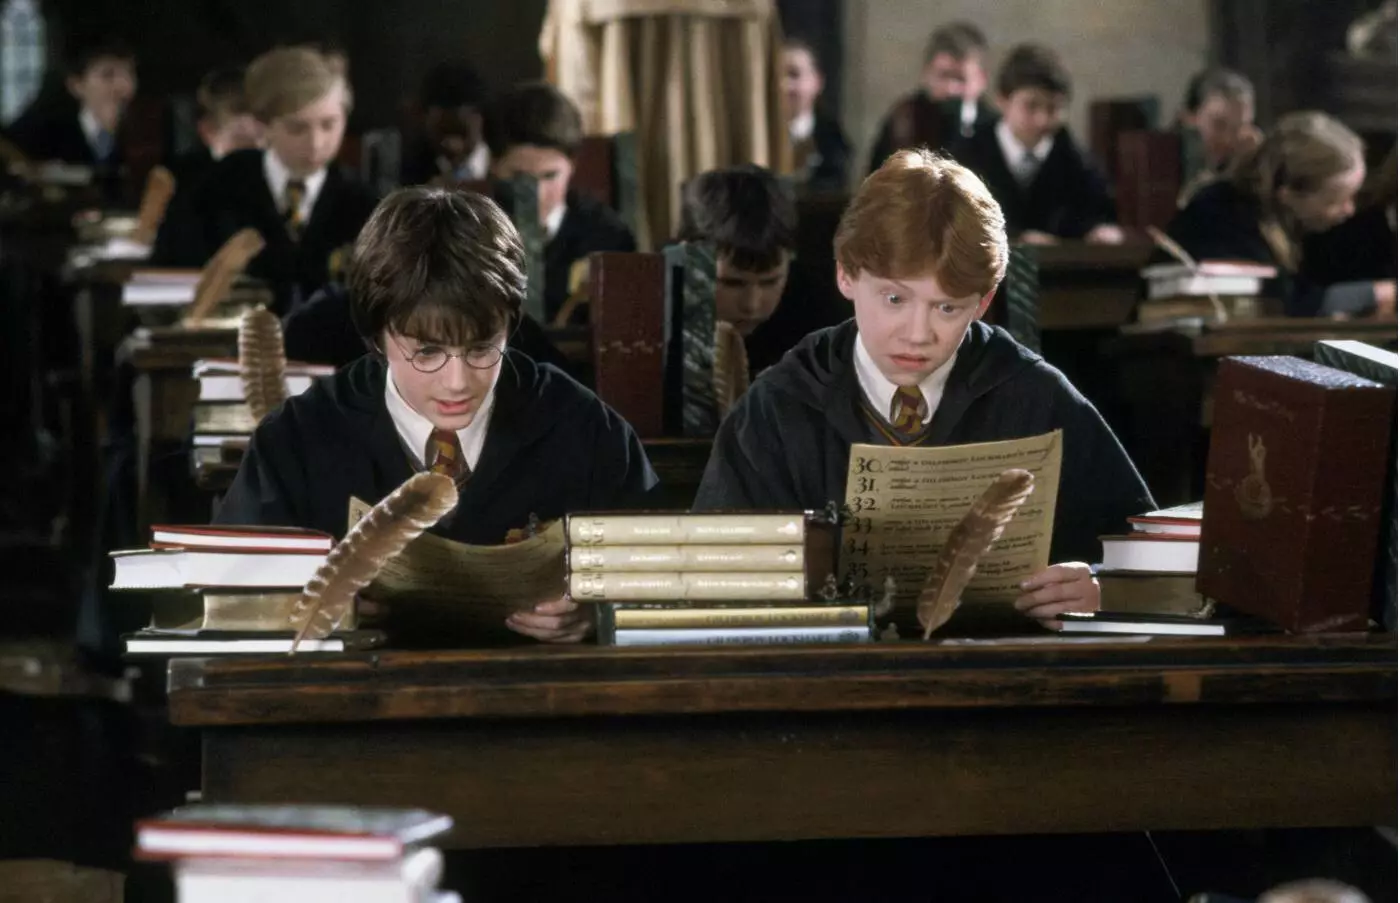 Daniel Radcliffe បានអភ័យទោសចំពោះអ្នកគាំទ្រ Harry Potter សម្រាប់ 